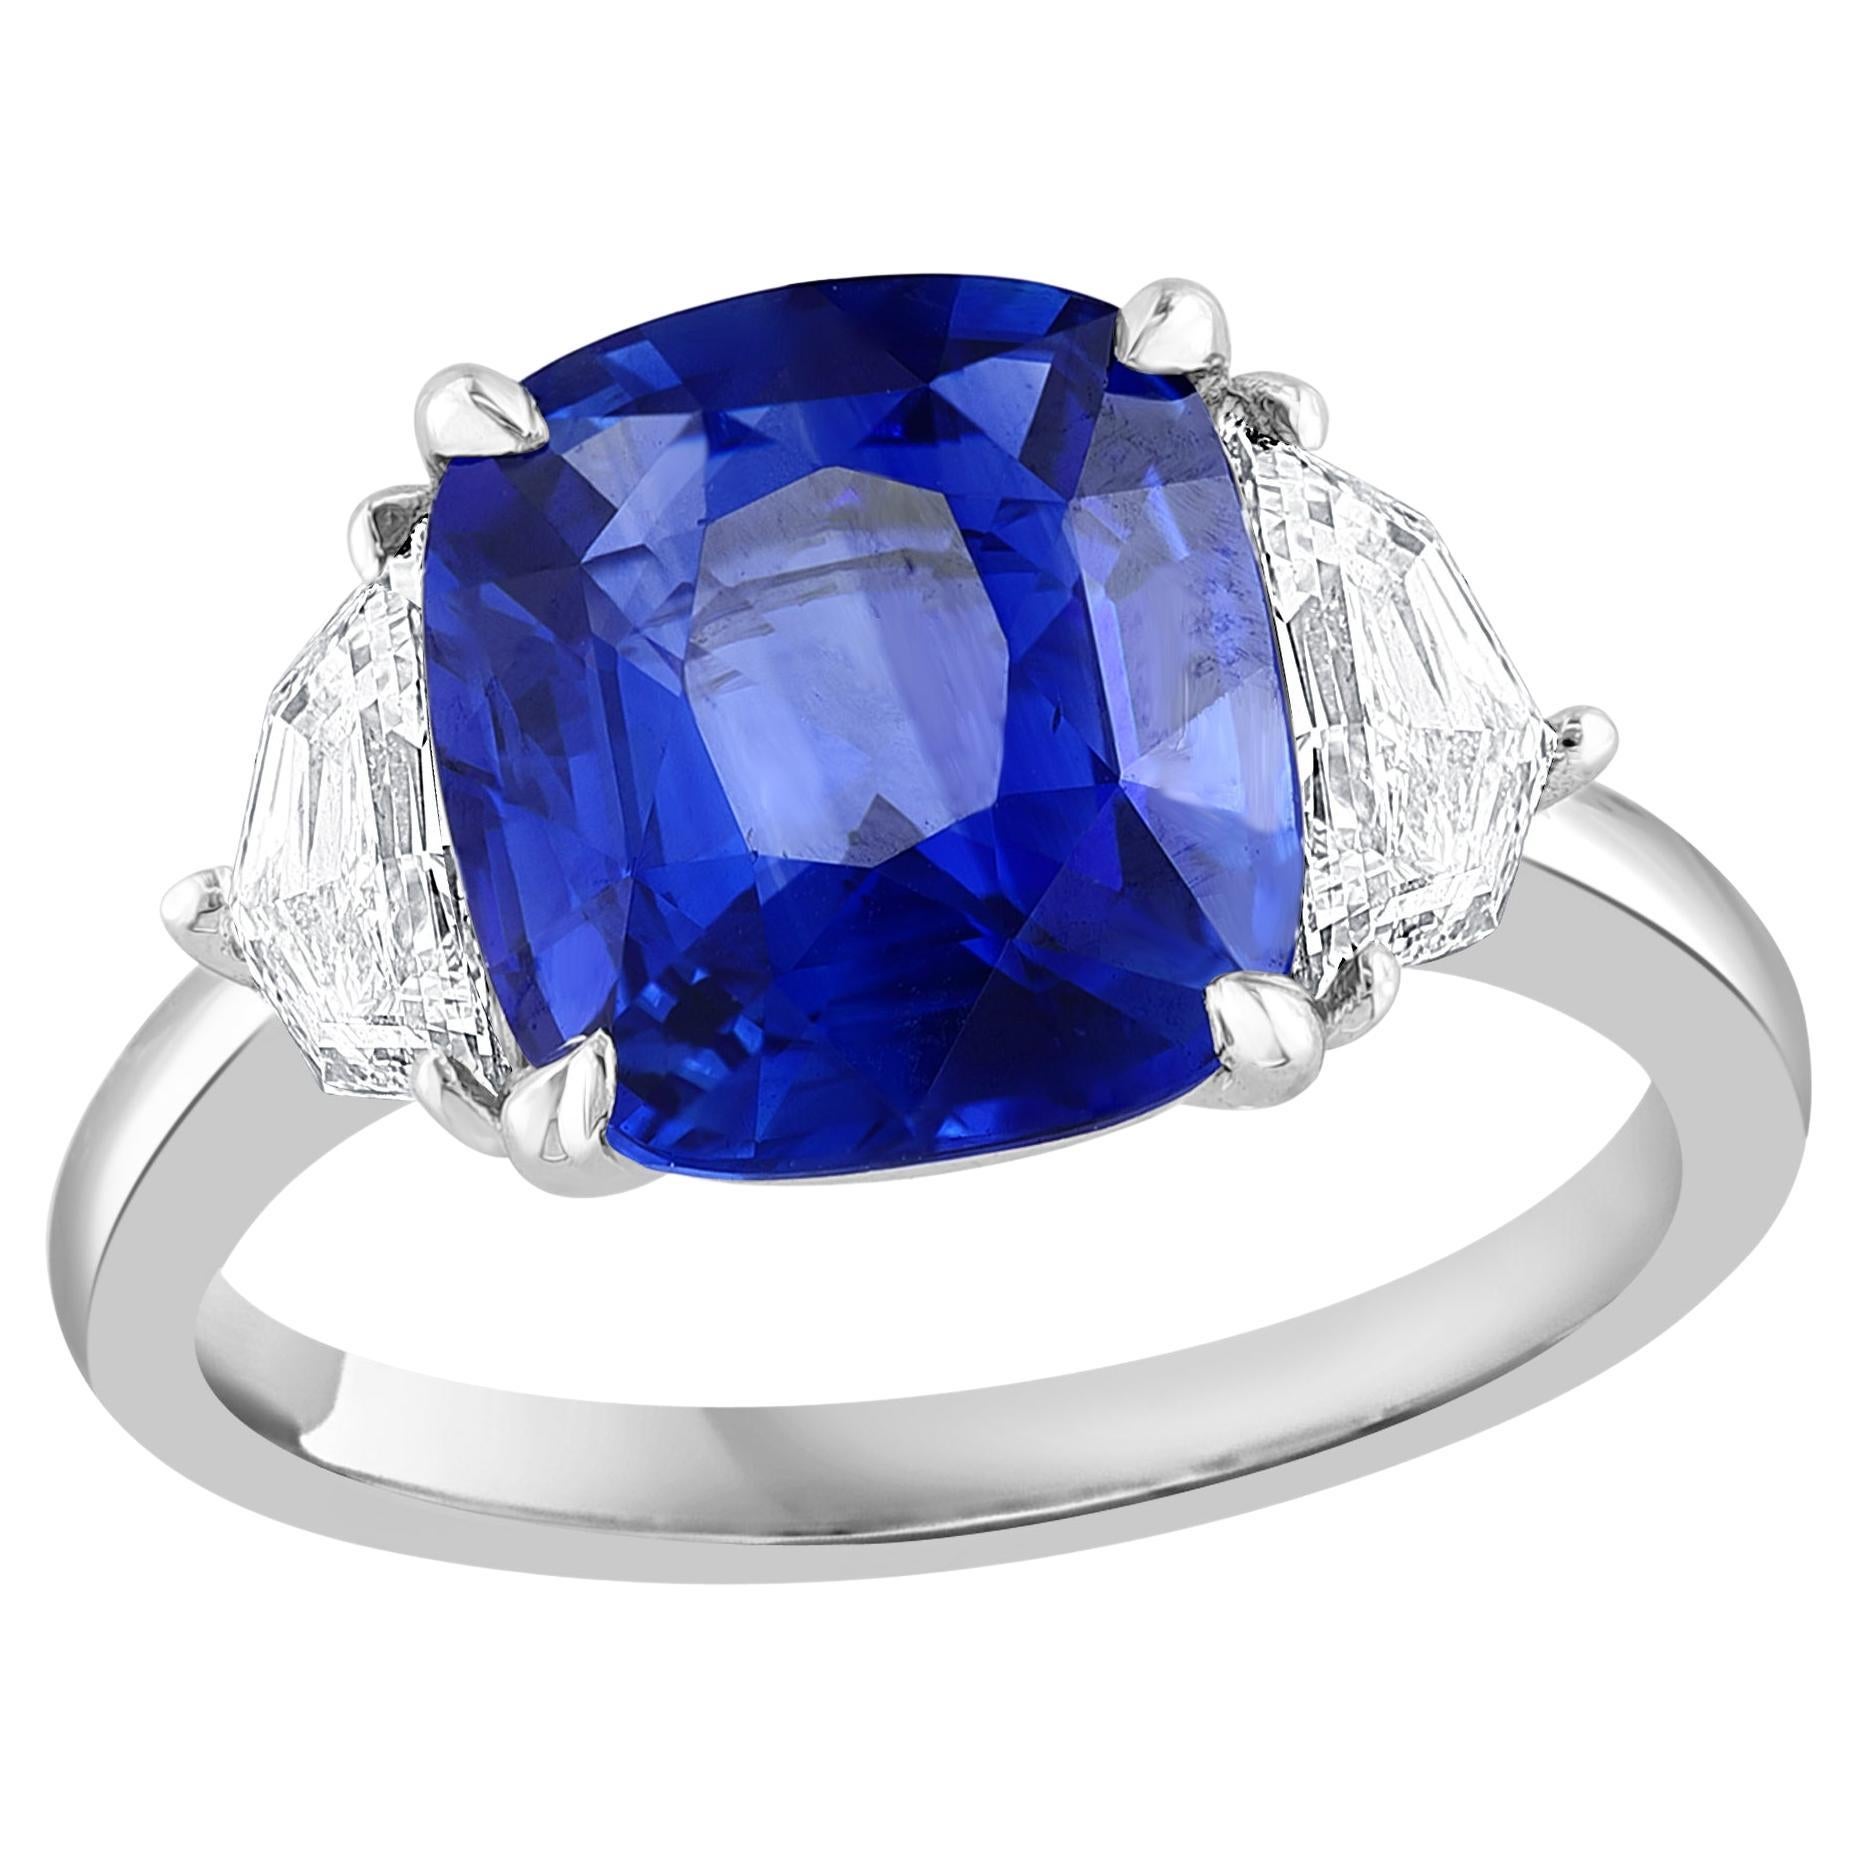 Certified 4.15 Carat Cushion Cut Sapphire Diamond Three-Stone Engagement Ring 